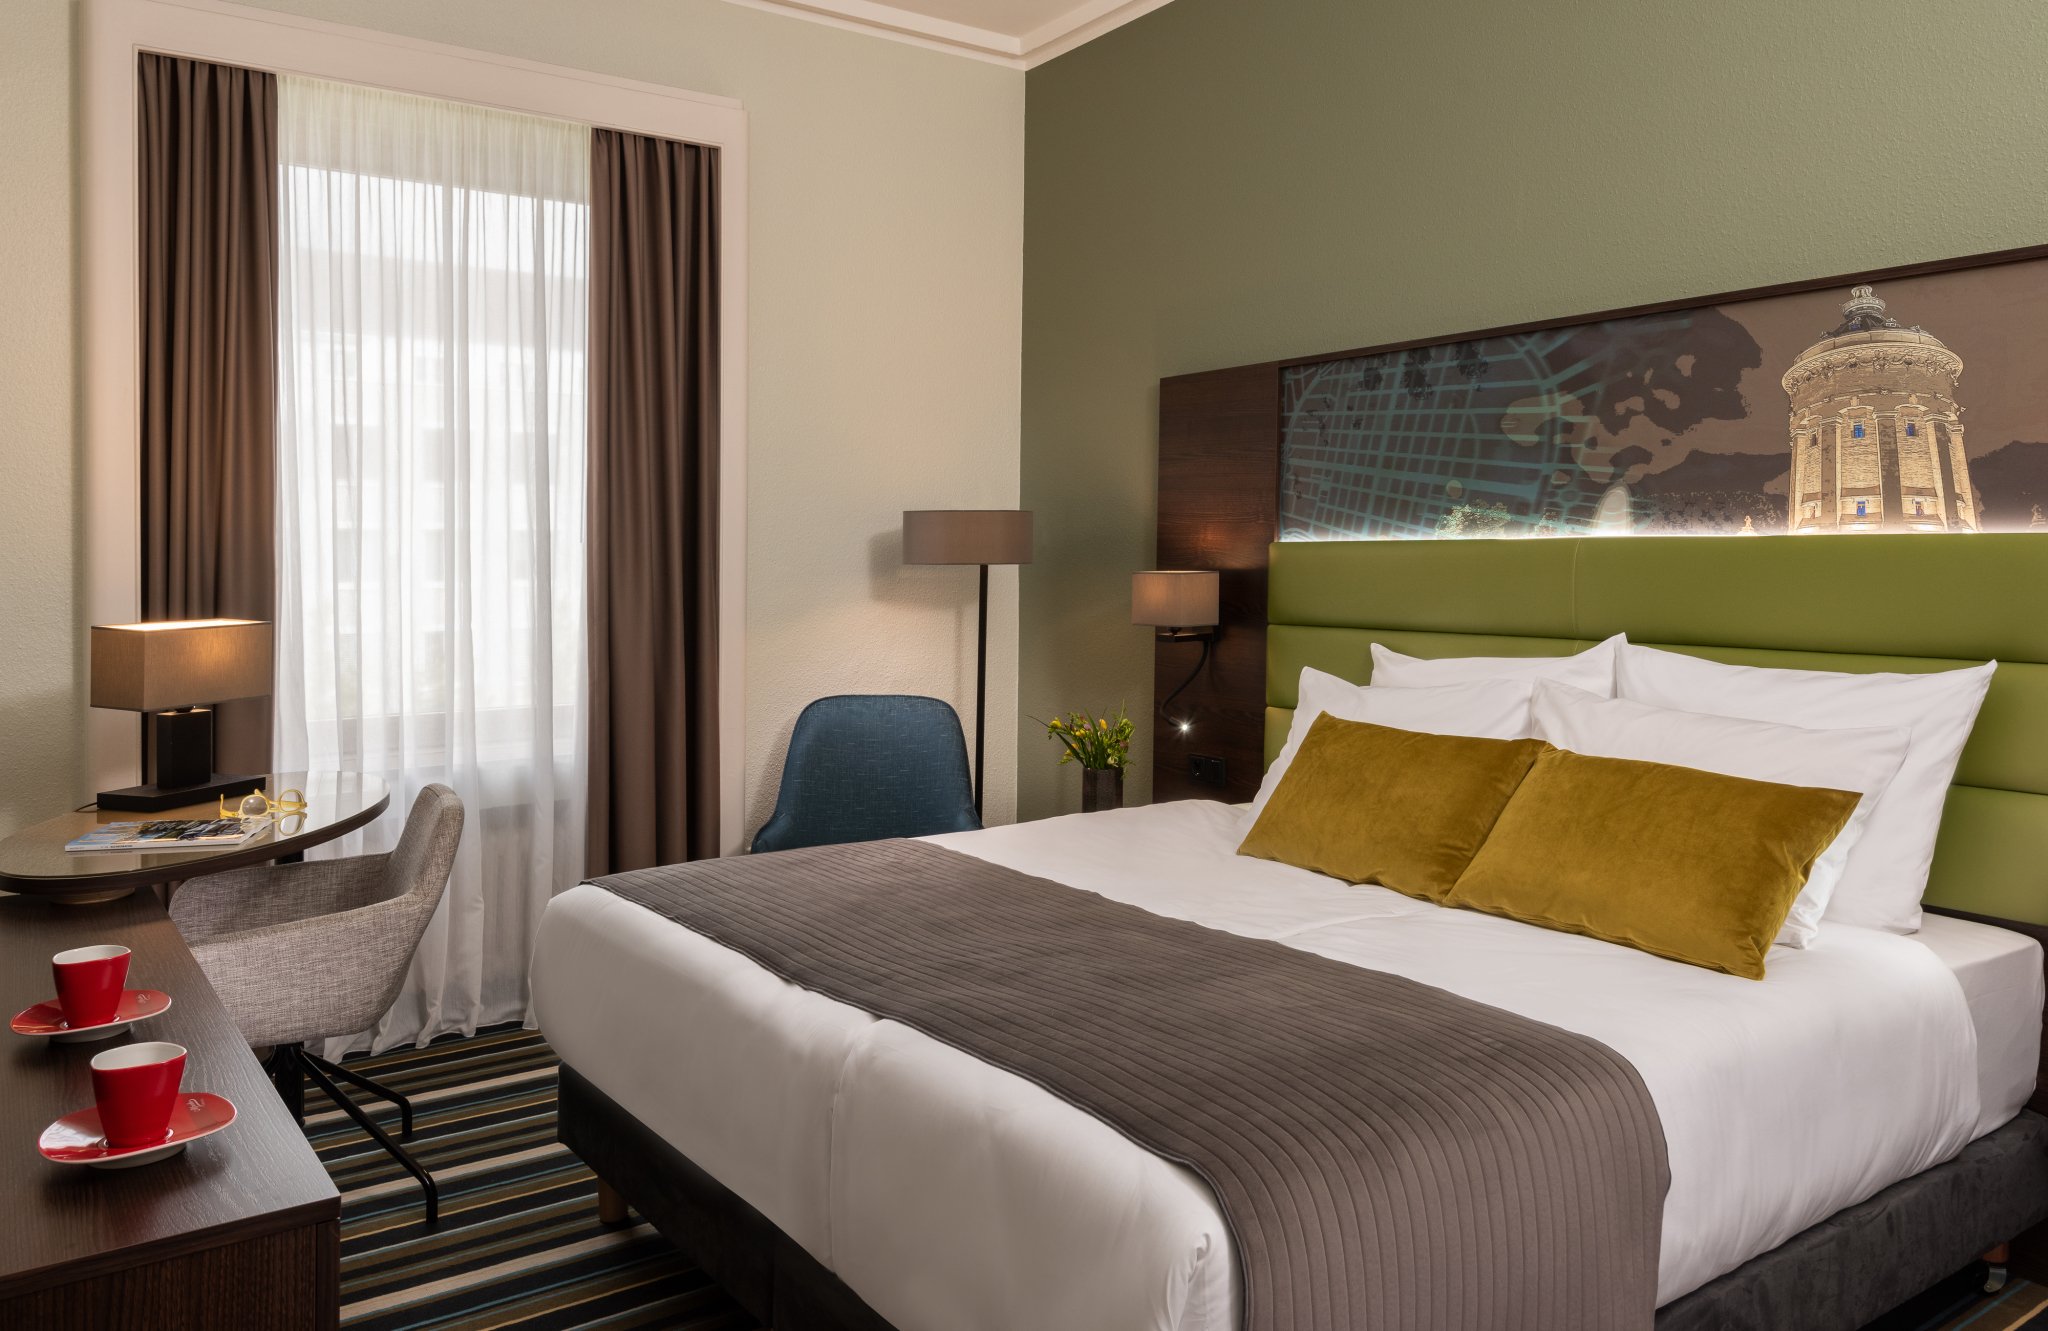 Leonardo Royal Hotel Mannheim - Comfort Room